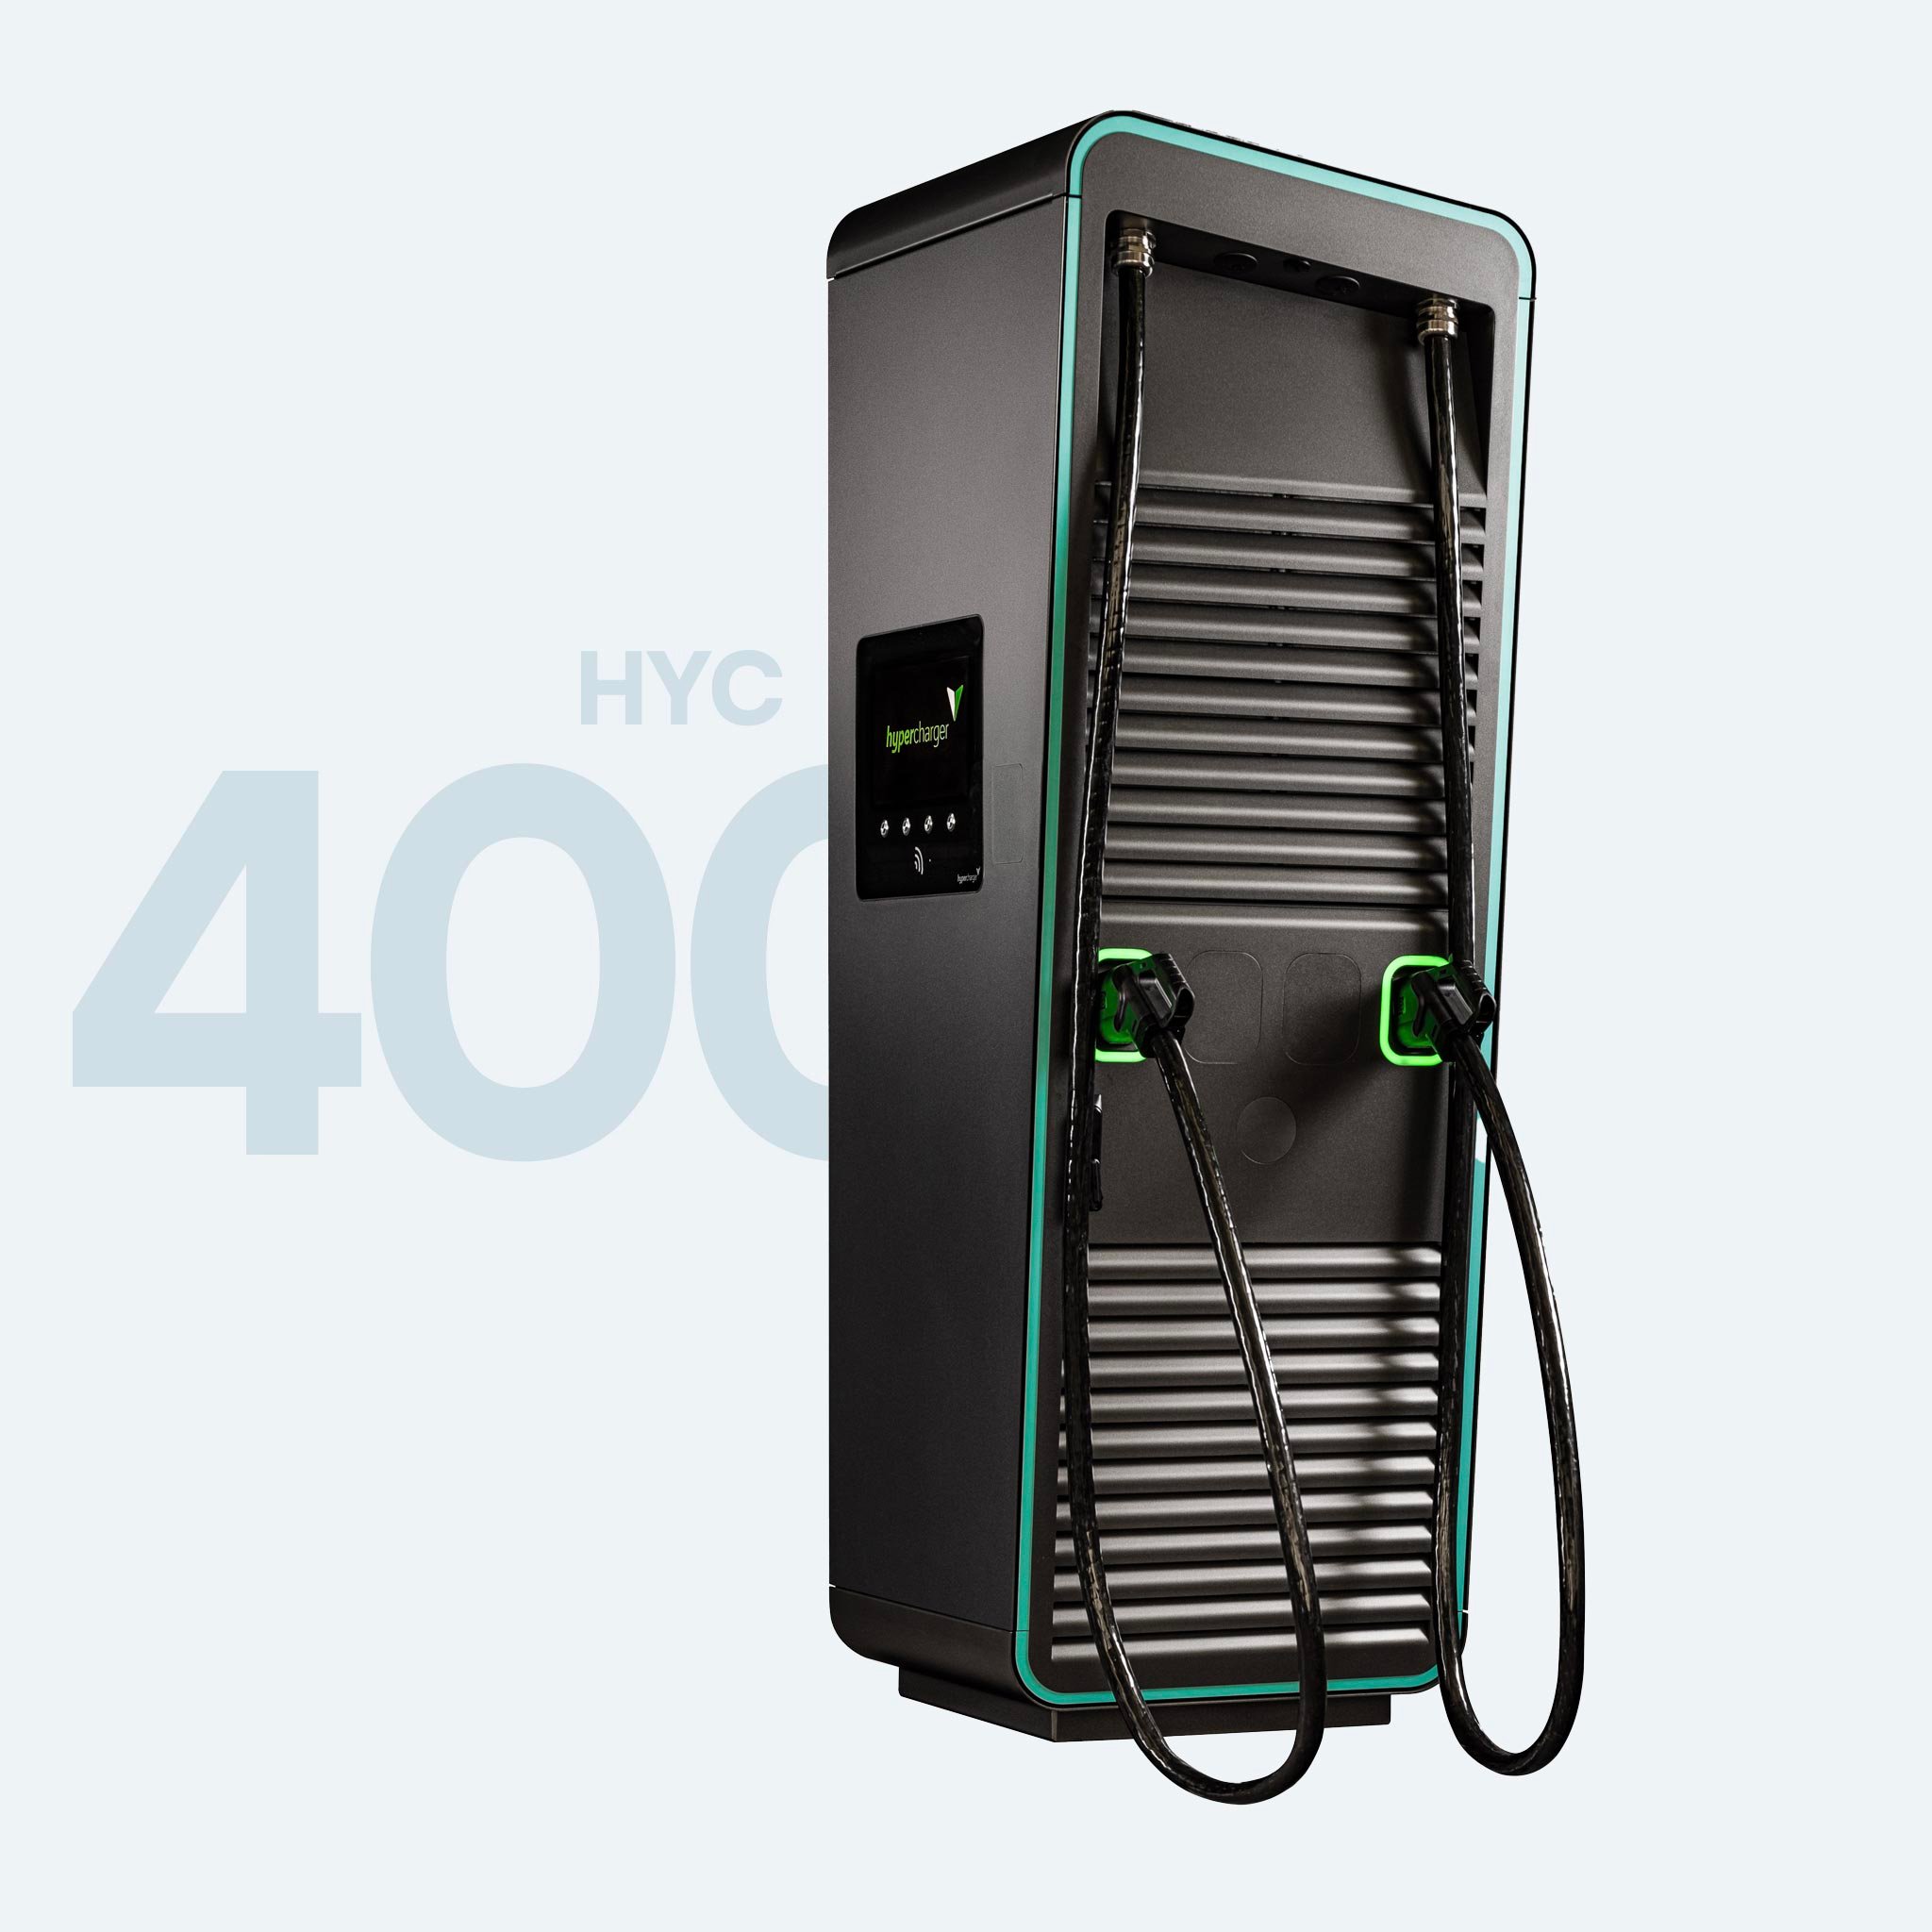 alpitronic hypercharger HYC 400 Schnellladestation - Individuell konfigurierbar